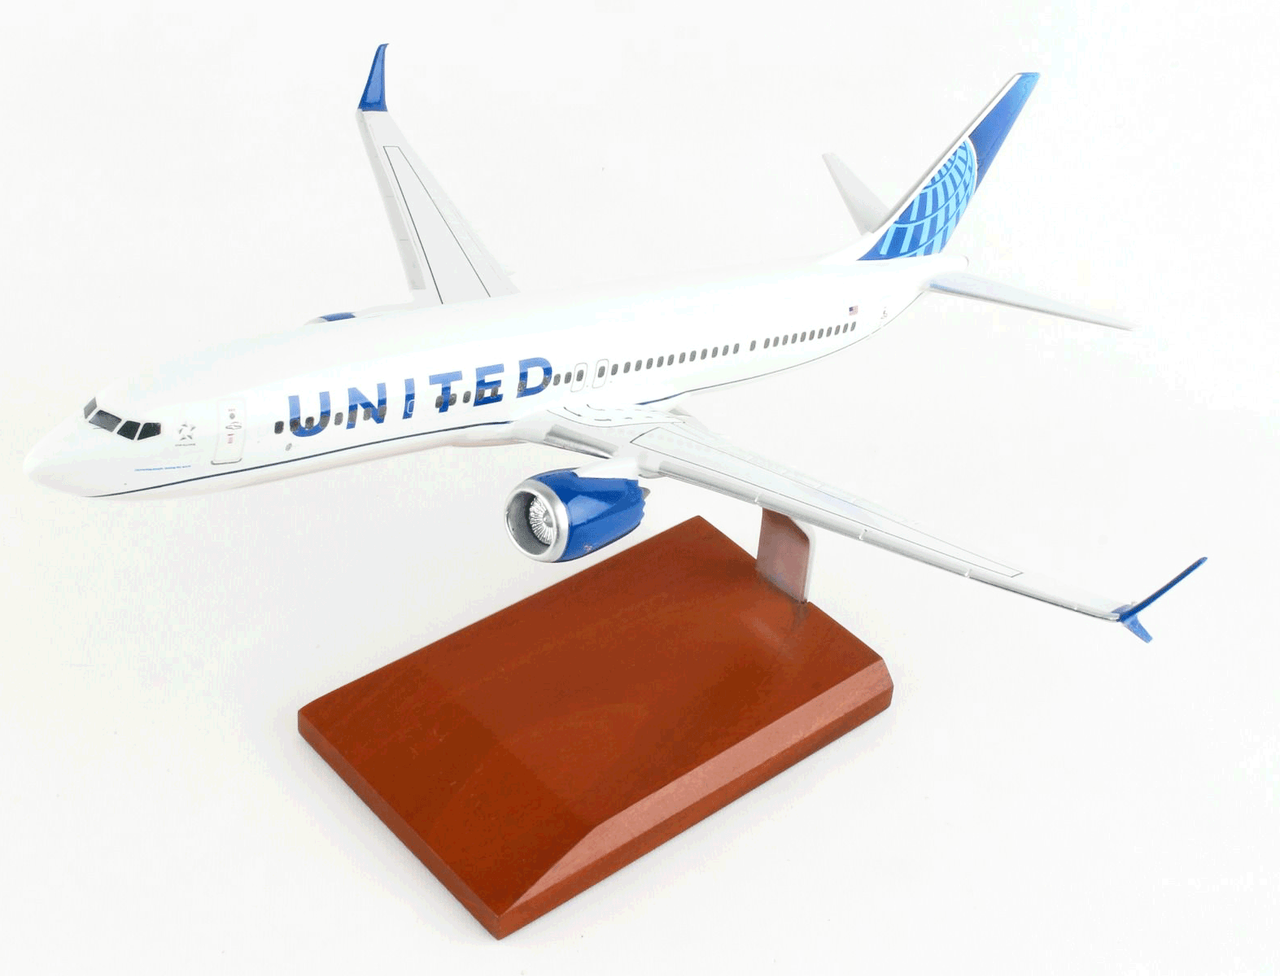 united boeing 737 800